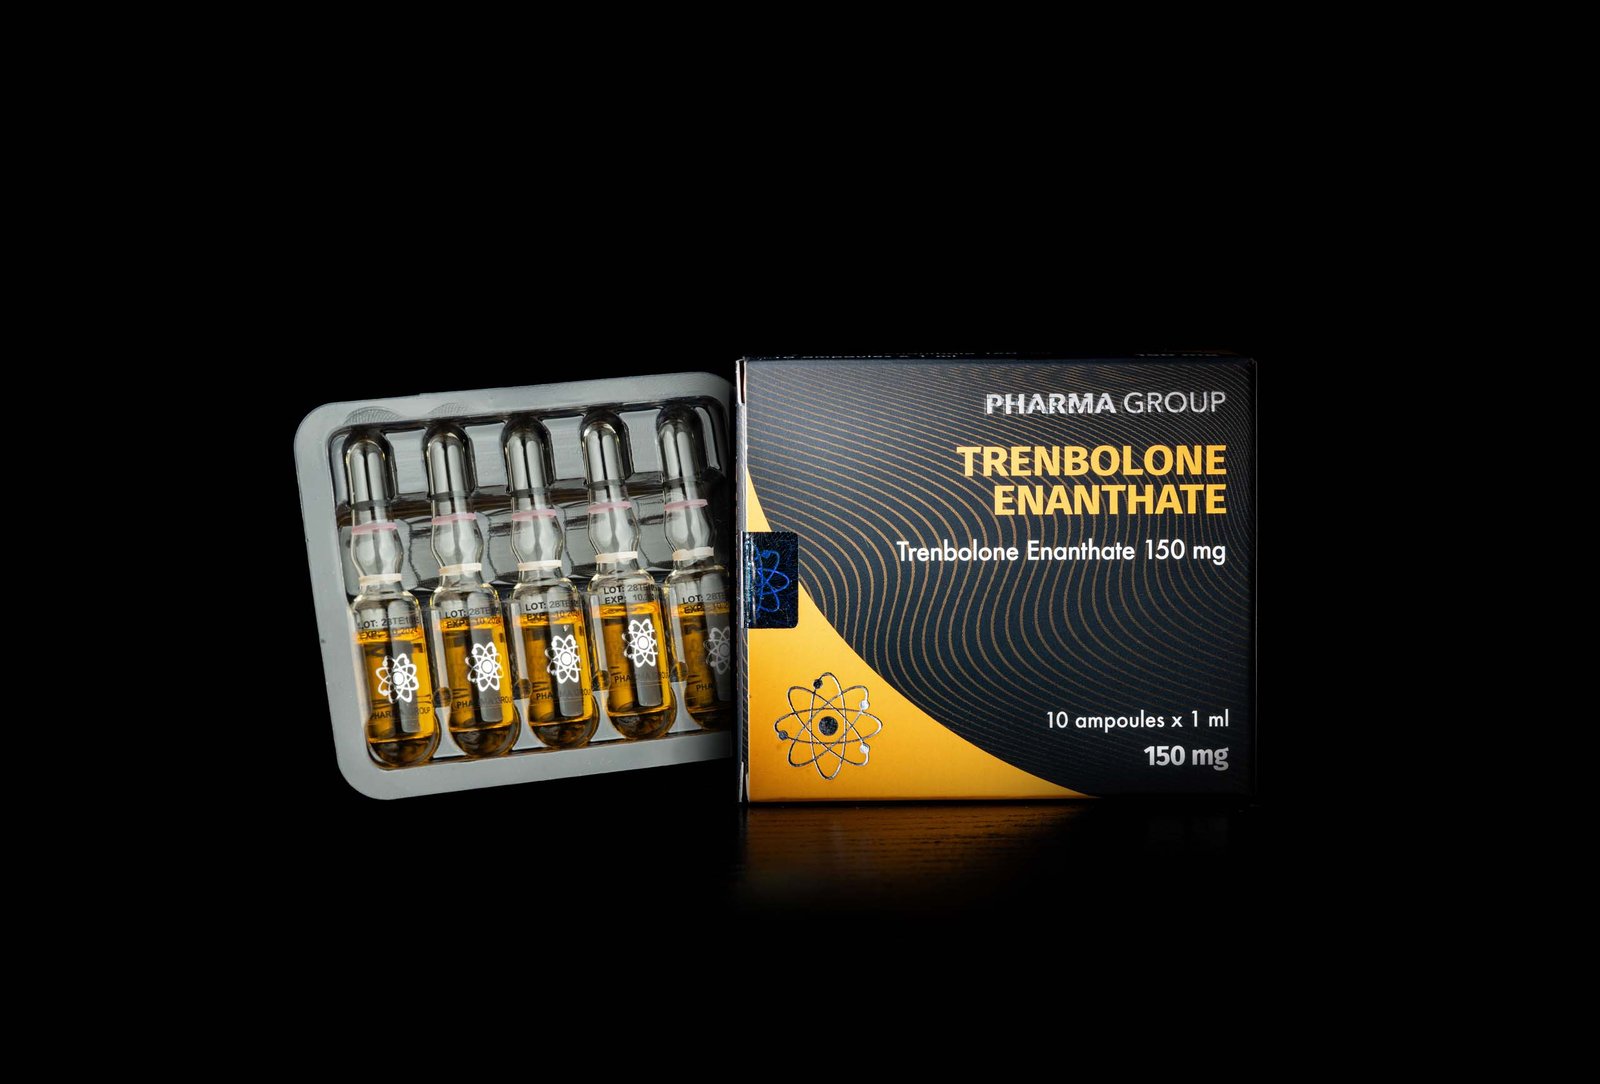 Pharma Group Trenbolone Enanthate 150